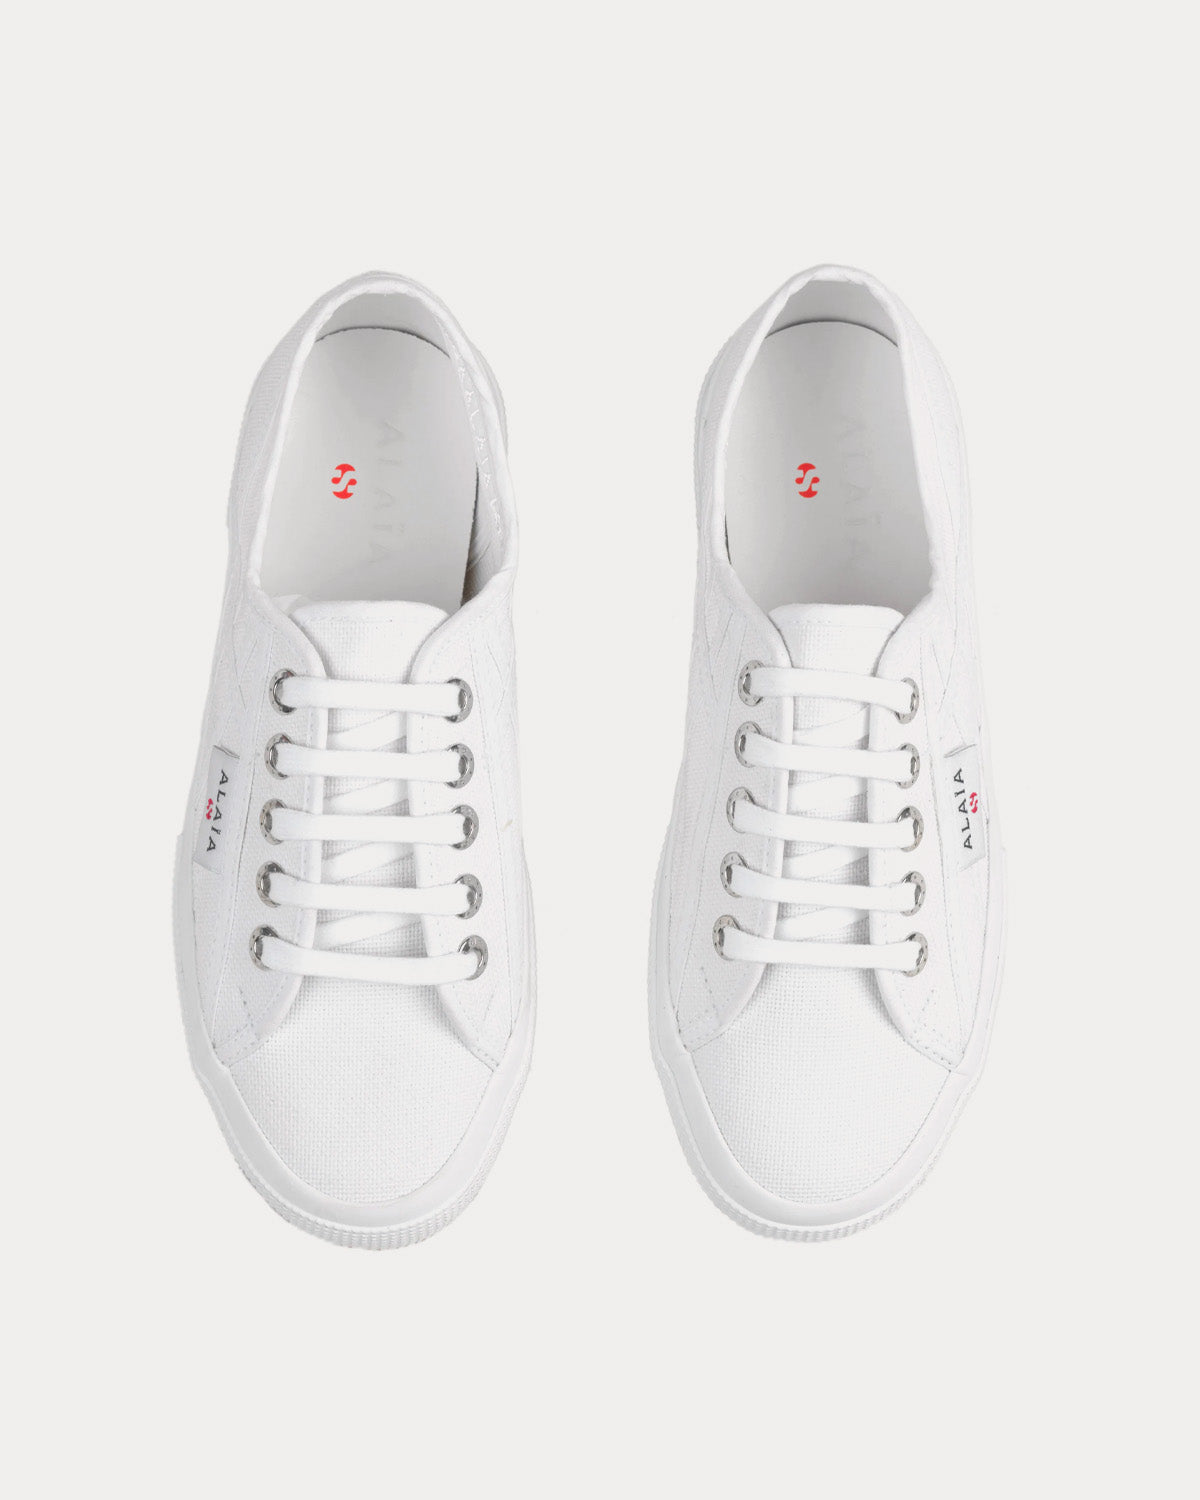 Alaïa x Superga - Leather White Low Top Sneakers